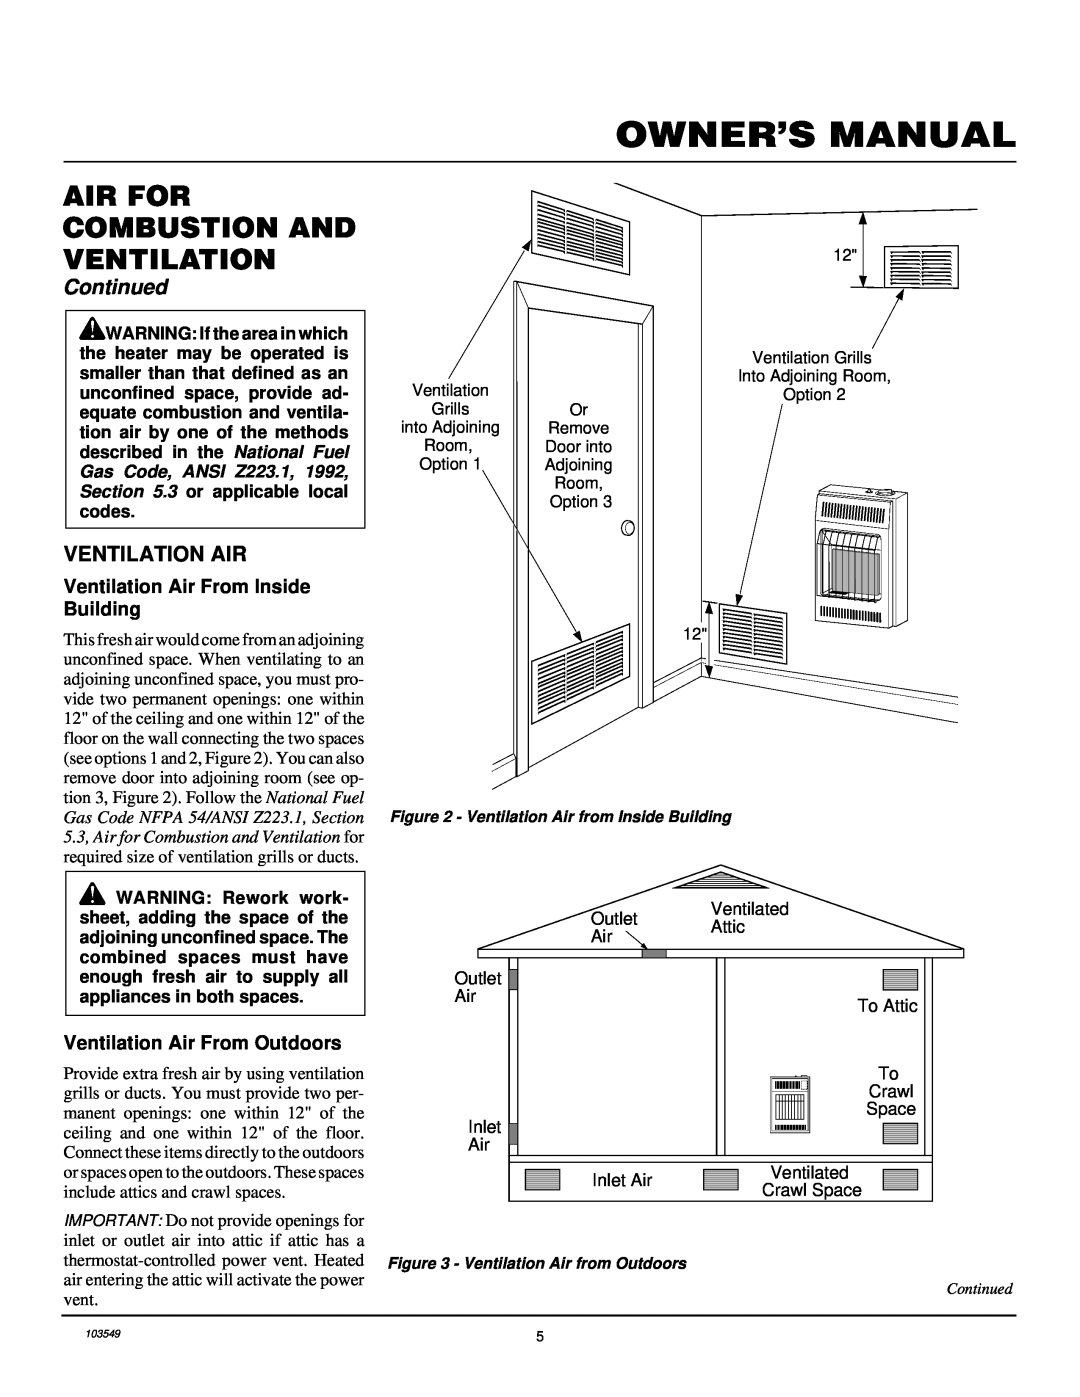 Desa CGN10RL installation manual Air For Combustion And Ventilation, Continued, Ventilation Air From Inside Building 